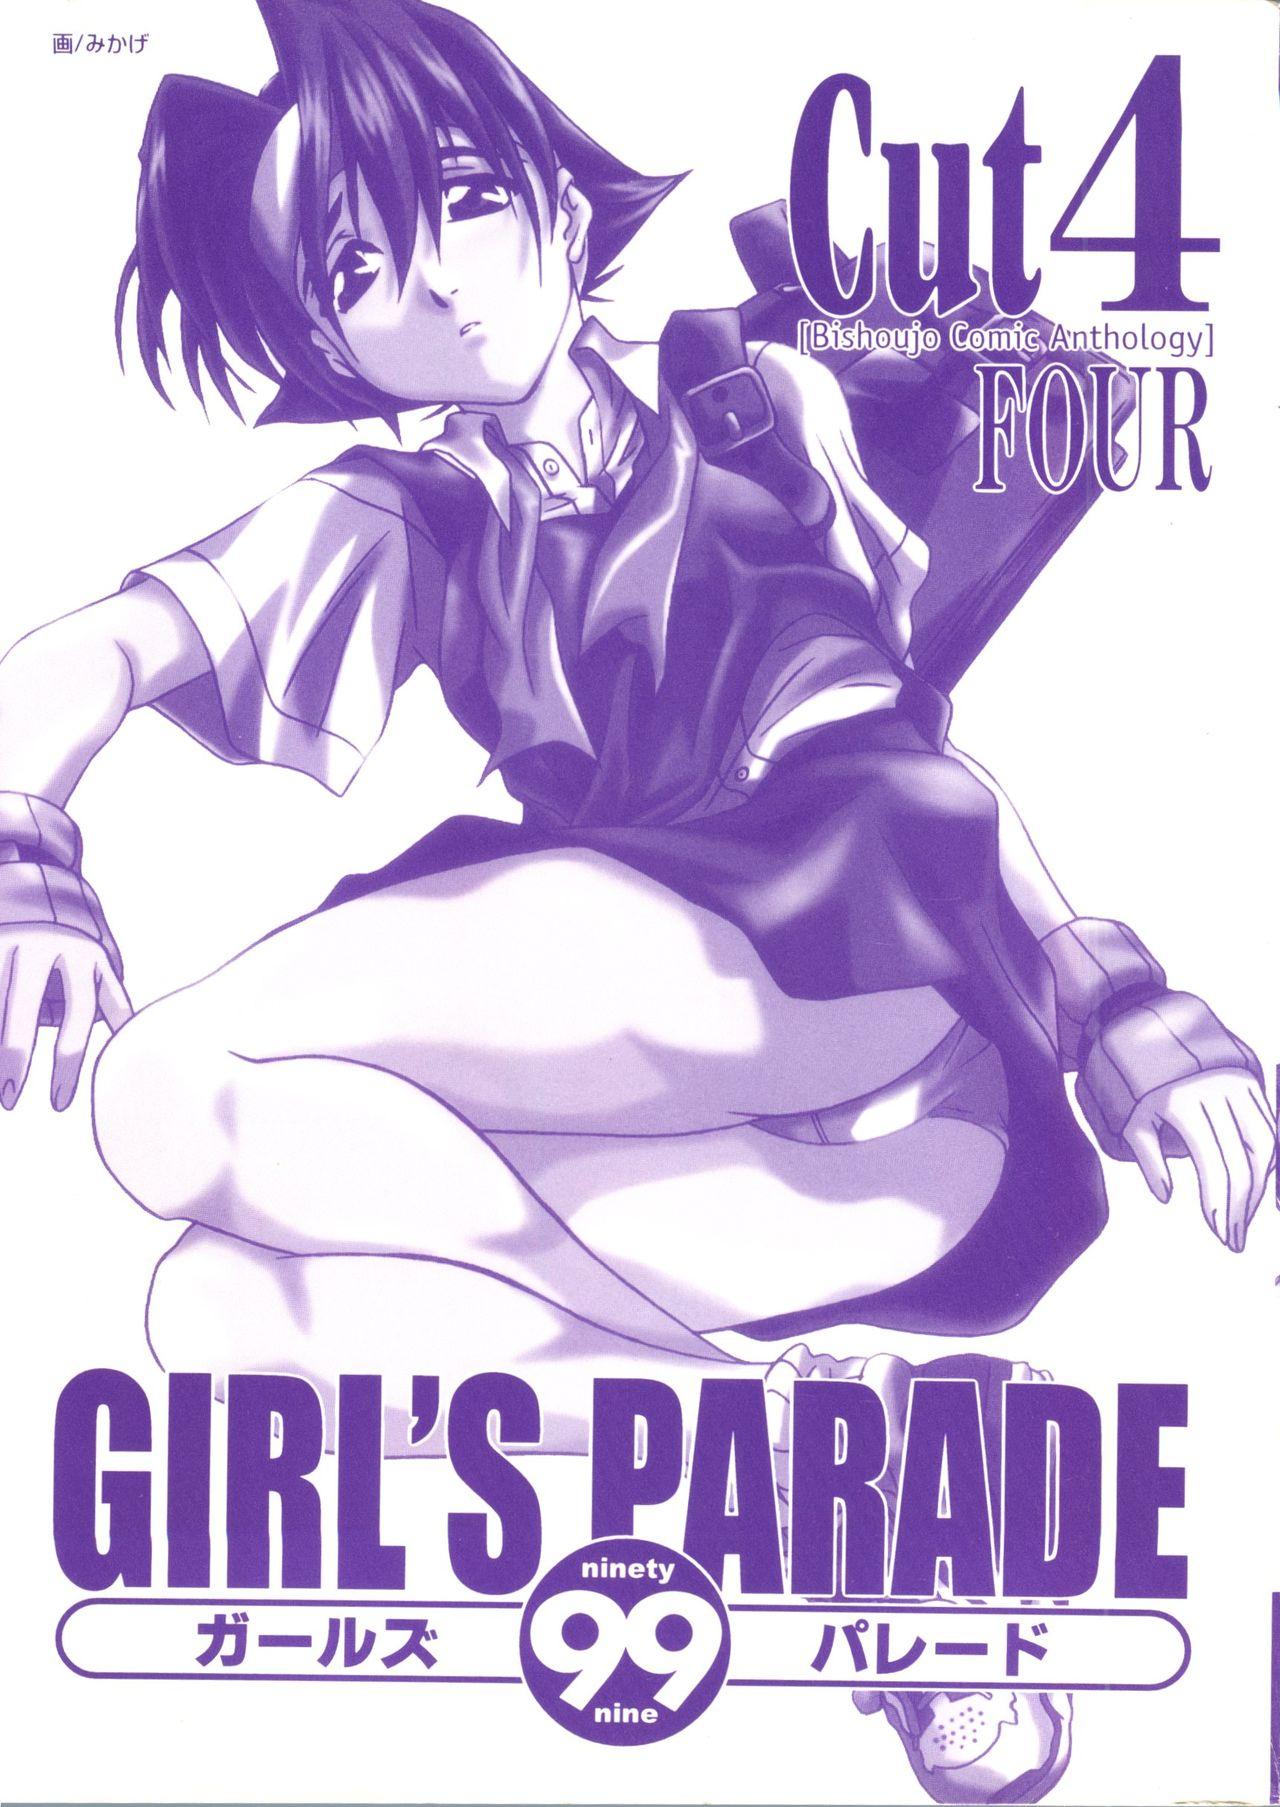 Spanking Girl's Parade 99 Cut 4 - Samurai spirits Rival schools Revolutionary girl utena Star gladiator Lez Fuck - Page 2